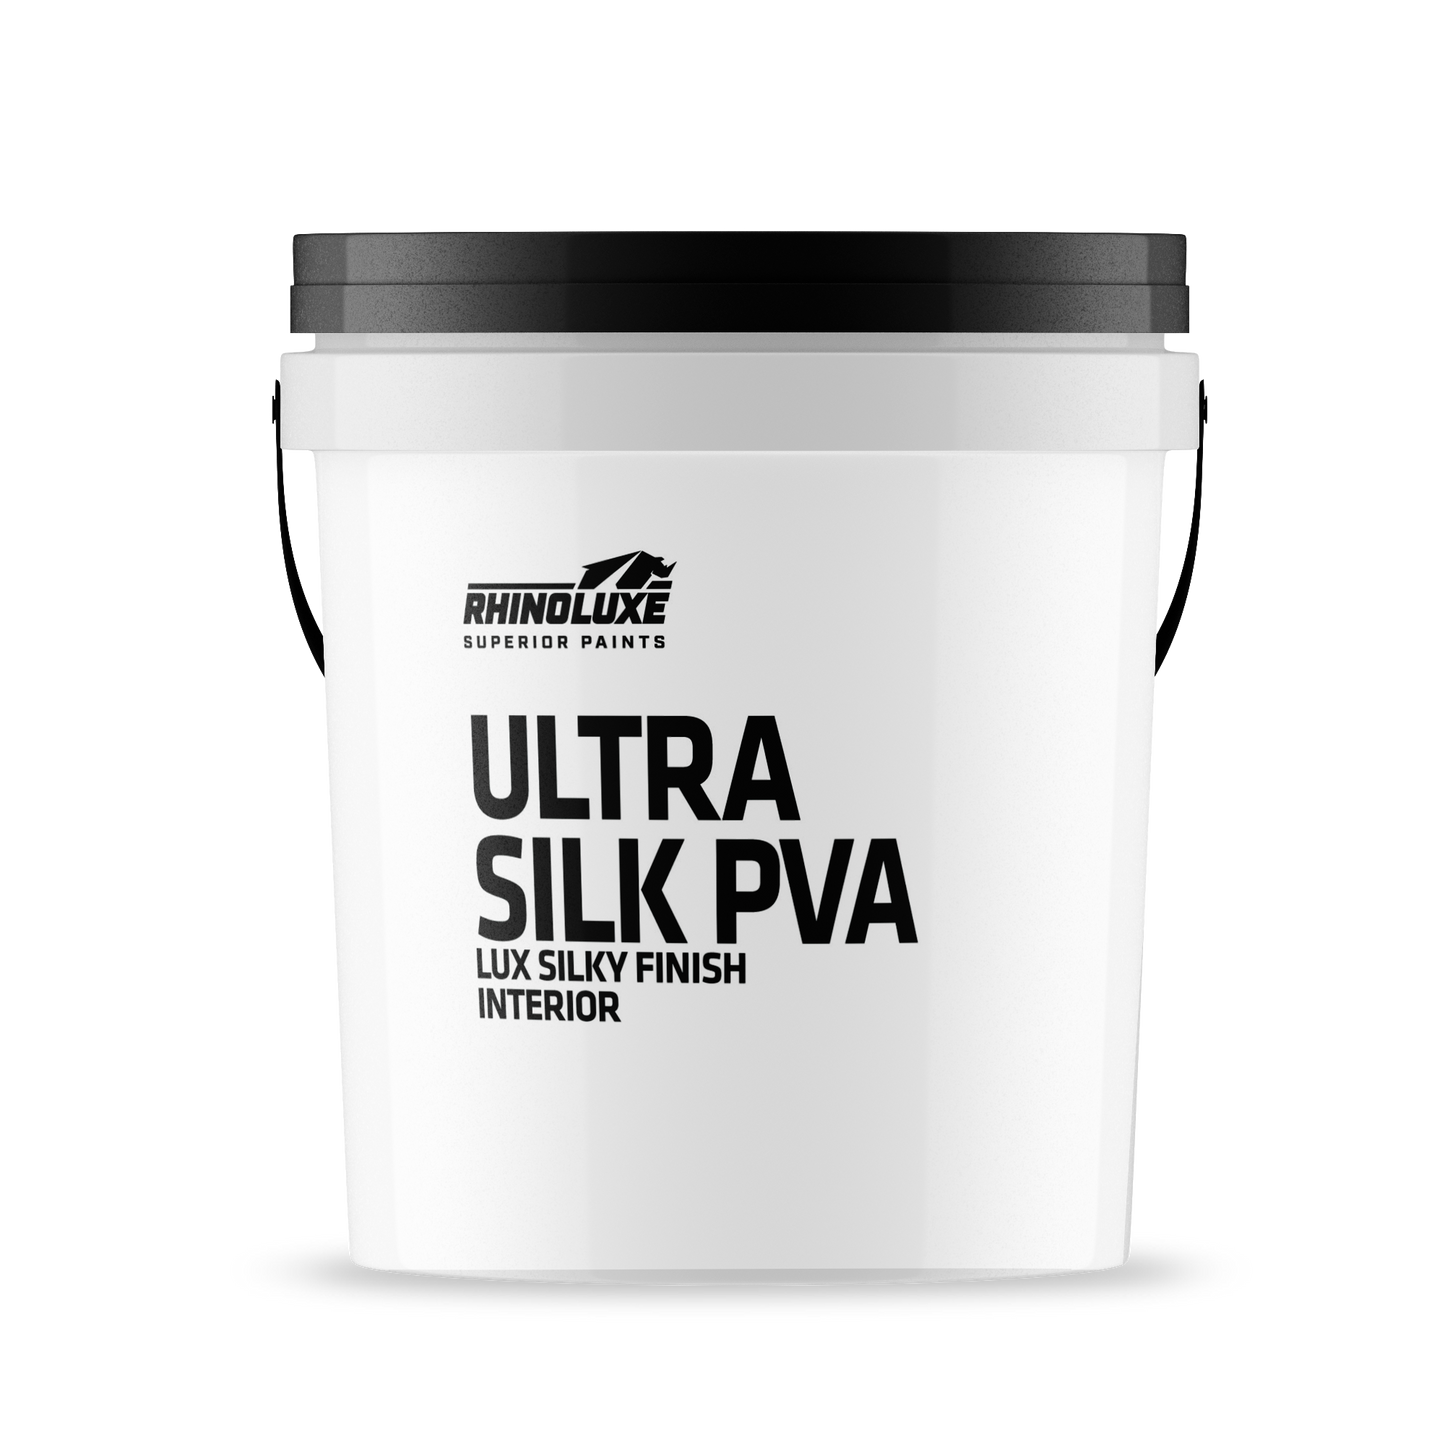 Ultra Silk PVA Lux Silky Finish Interior Acrylic Paint